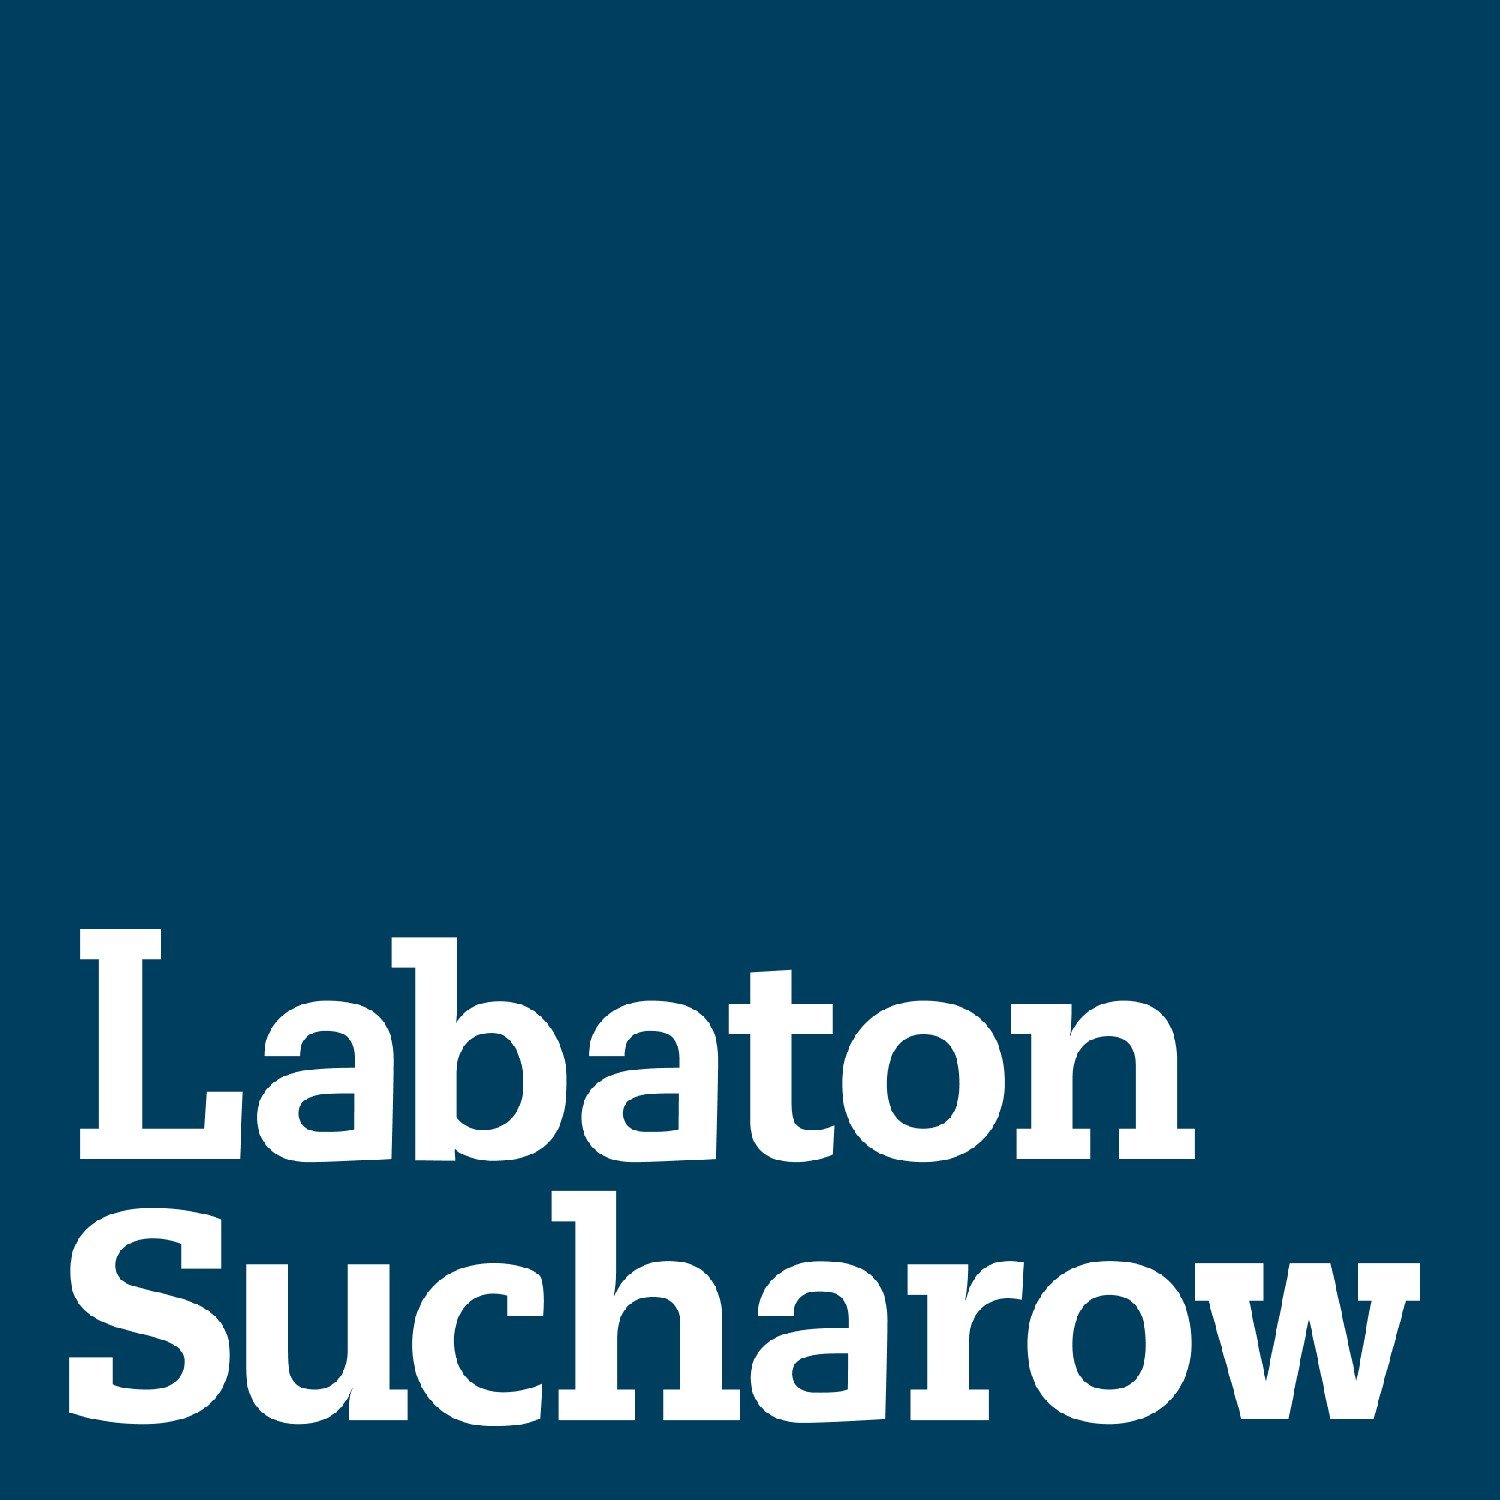 Labaton Sucharow LLP, Monday, August 2, 2021, Press release picture